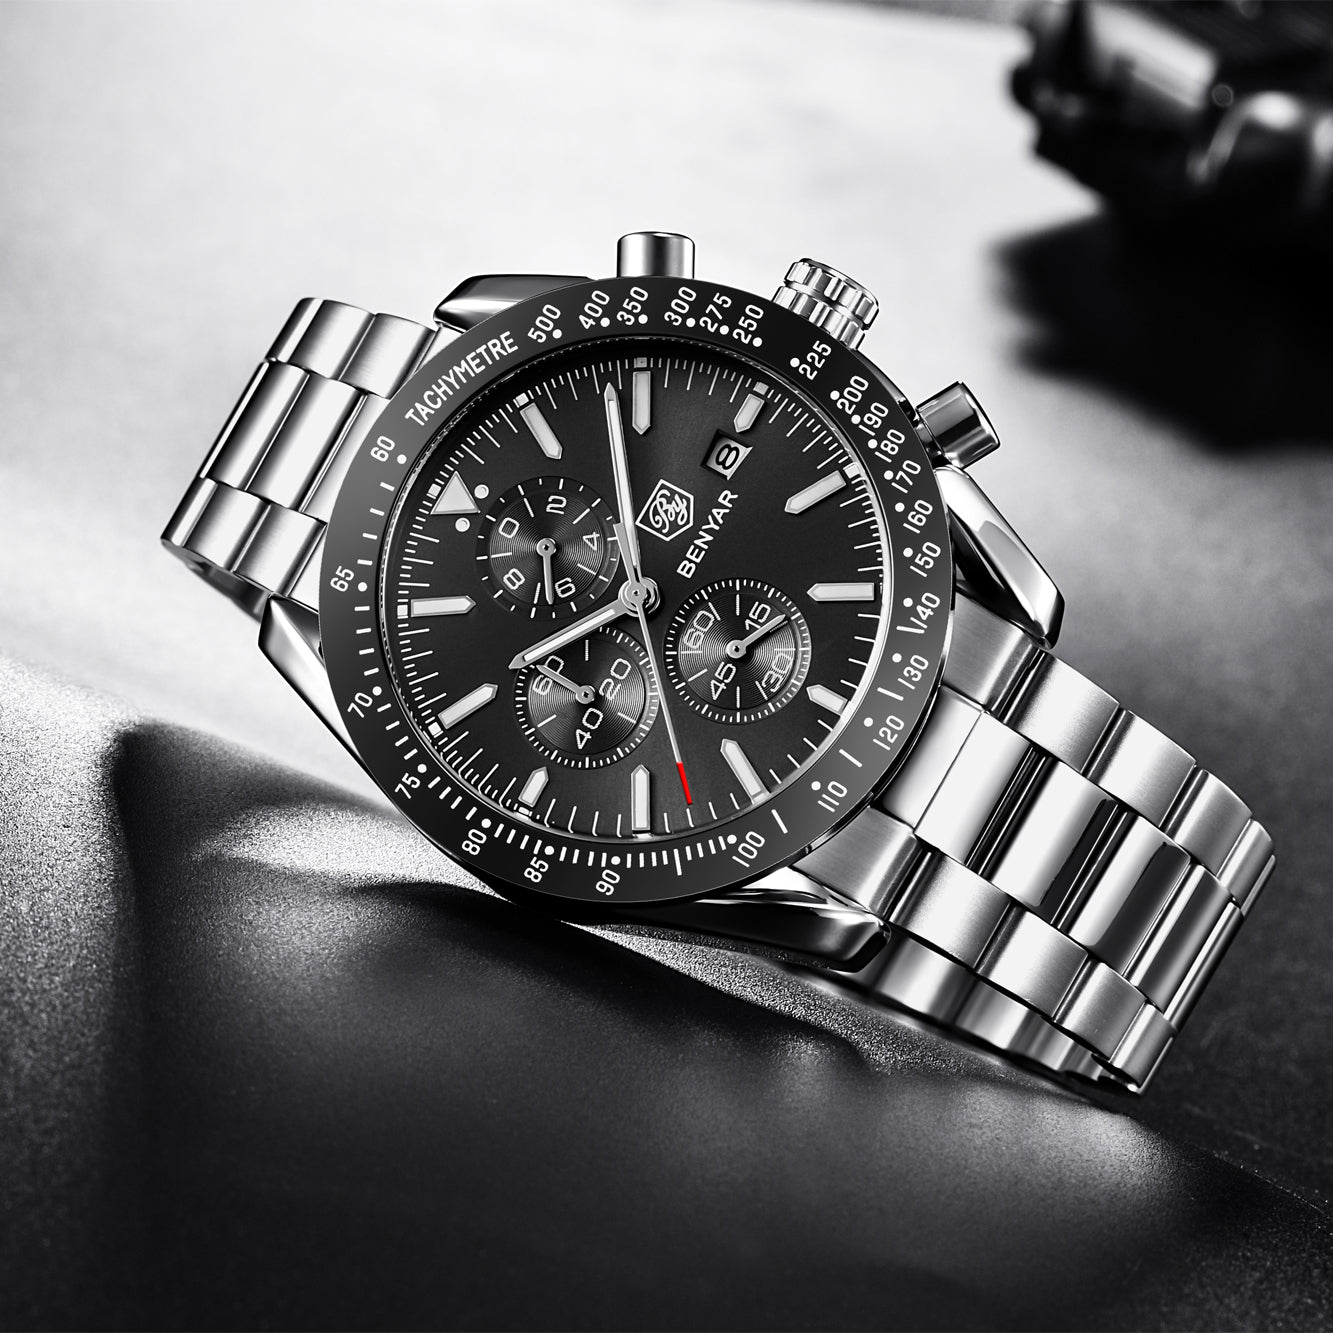 BENYAR BY-5140 New  Men’s Quartz watches Chronograph  Mens Watches Top Brand Luxury Fashion 45mm Military Watch Men Clock